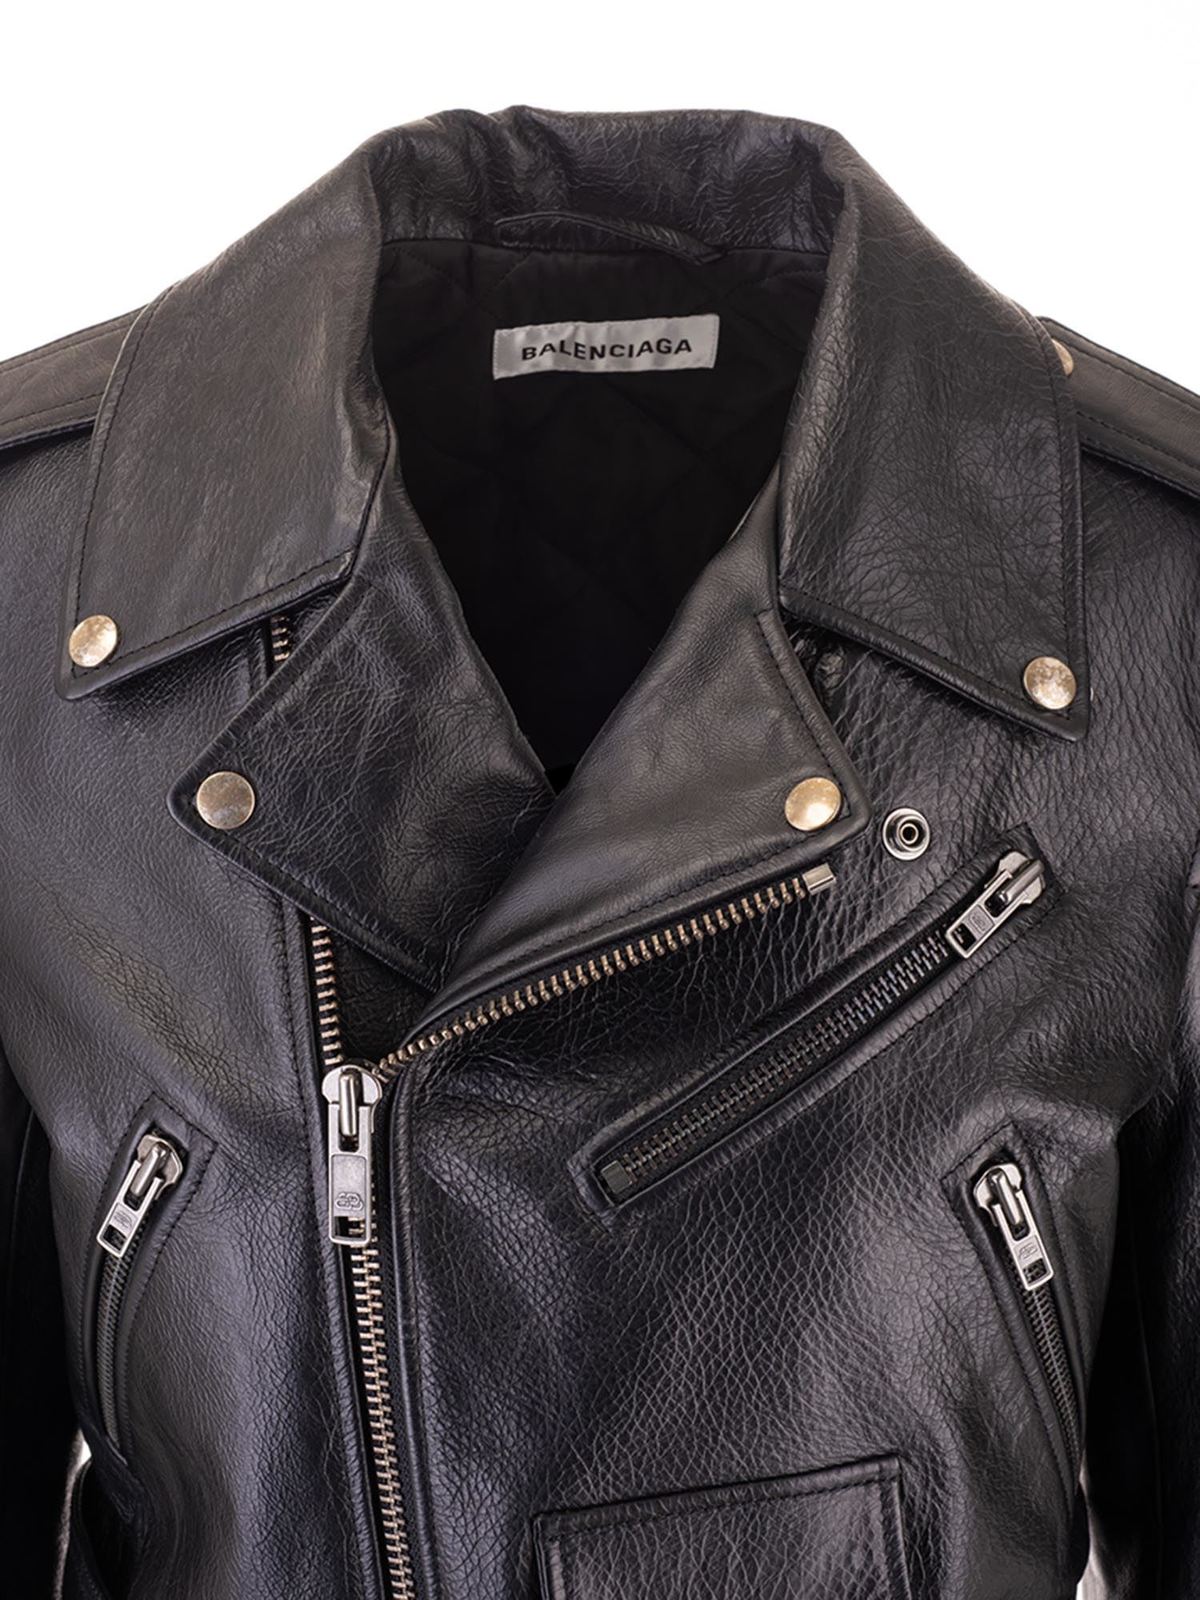 jacket Balenciaga - Leather Biker jacket with logo in black - 583562TES241000